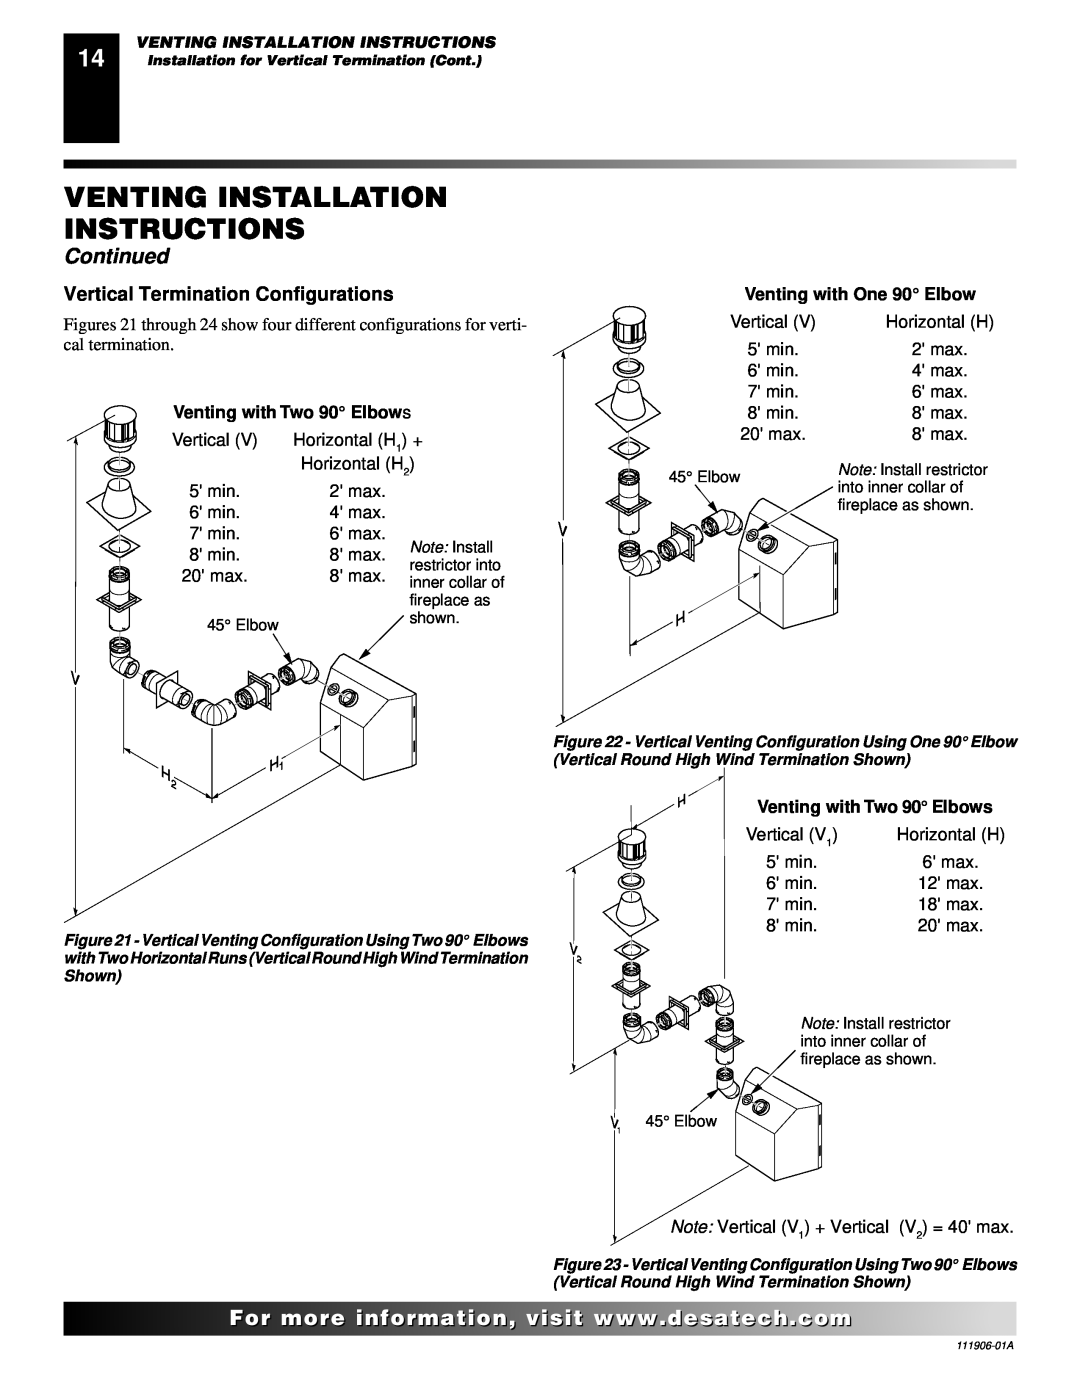 Desa (V)V42NA(1) installation manual Venting Installation Instructions, Continued, Vertical Termination Configurations 